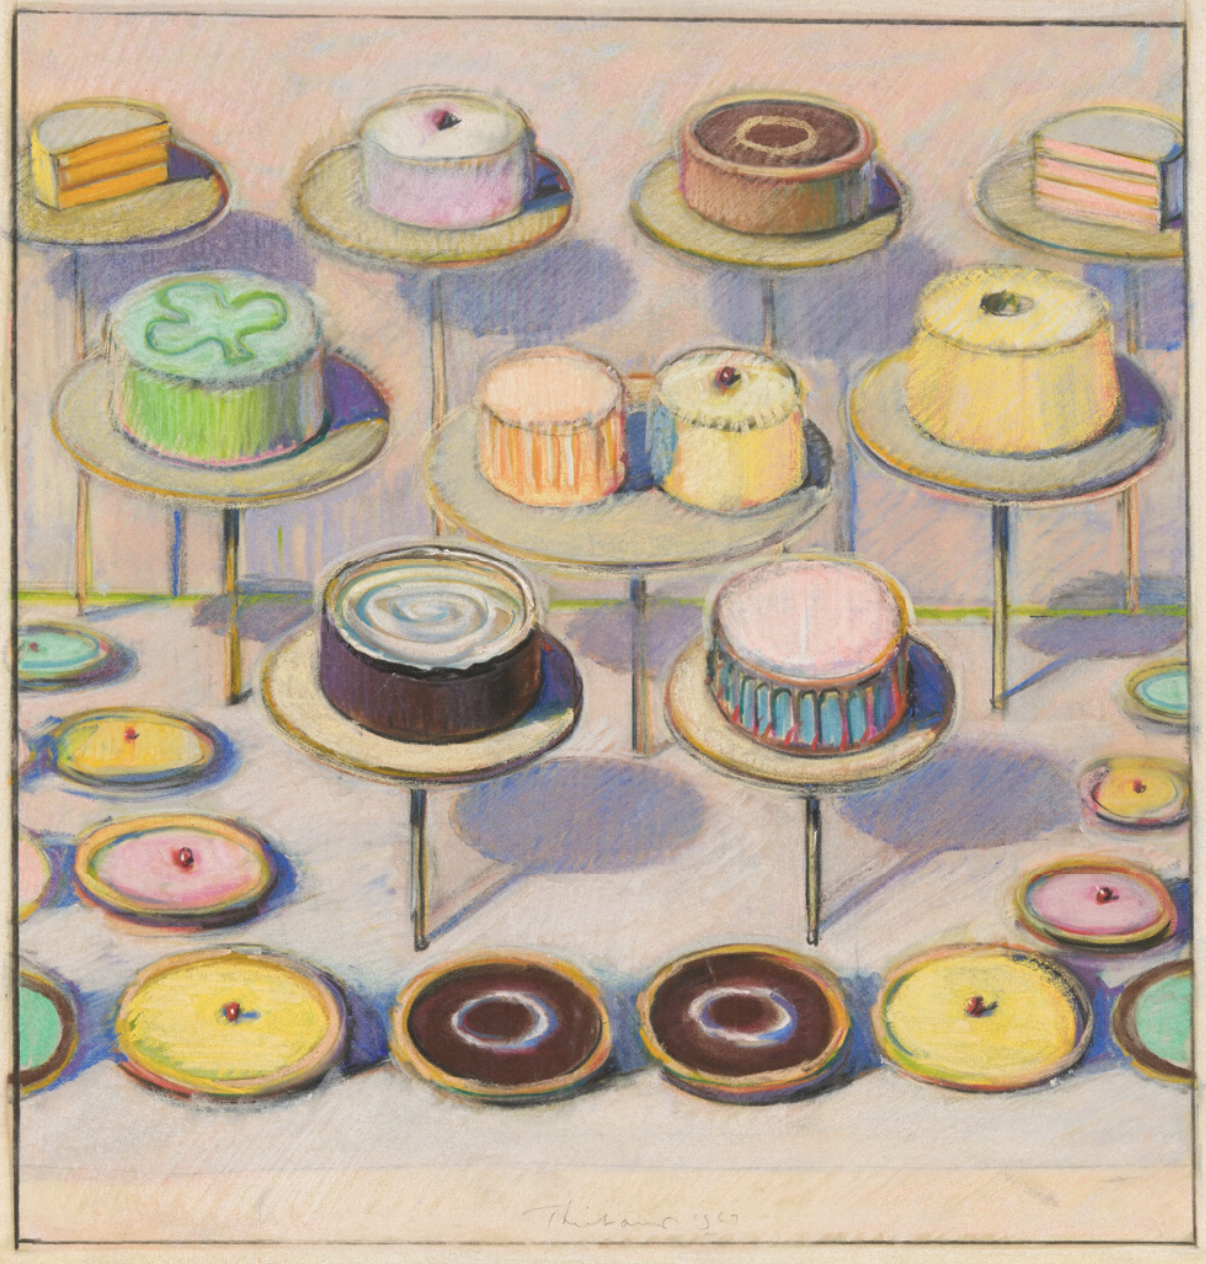 Wayne Thiebaud, "Cakes No. 1," 1967, pastel on cream tracing paper, 44.5 x 47.4 cm, Art Institute of Chicago, Chicago, Illinois, USA. © Wayne Thiebaud : Licensed by VAGA at ARS, New York